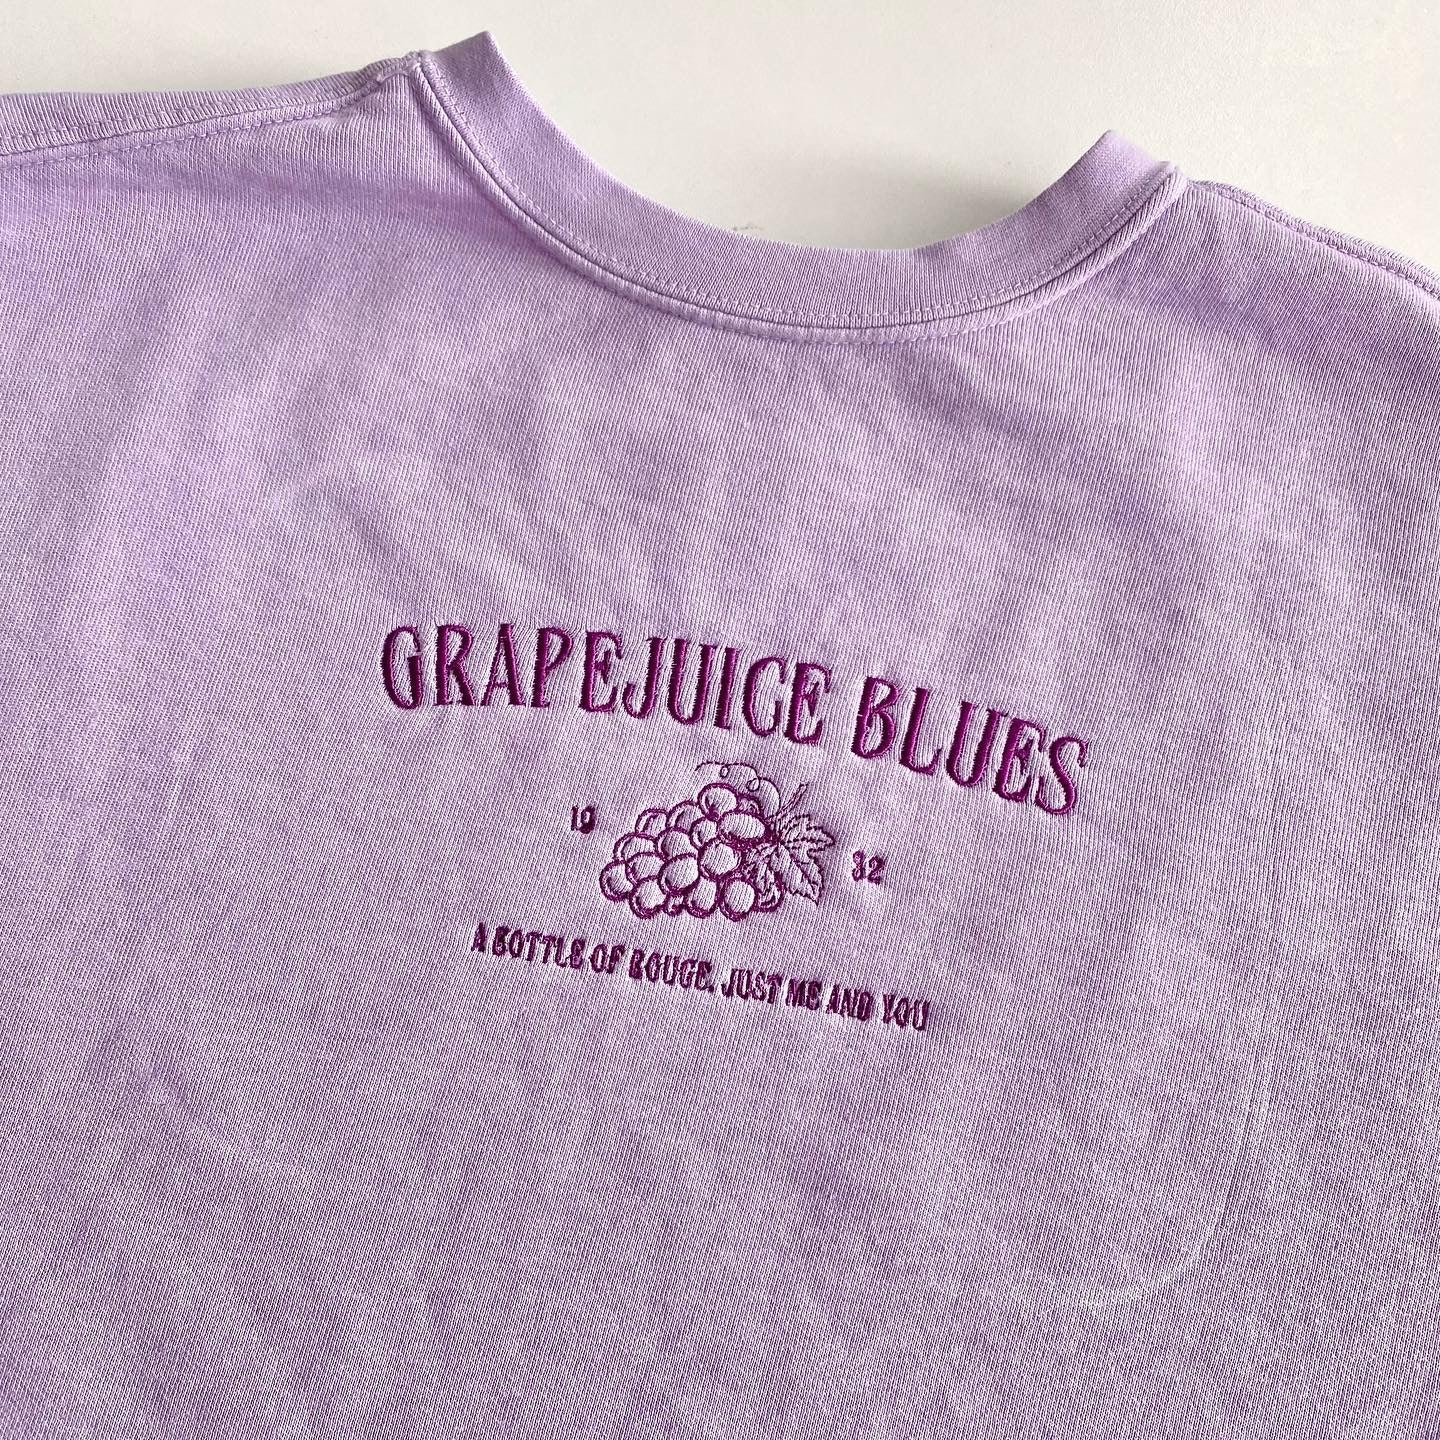 Grapejuice Sweatshirt - Emacity Threads